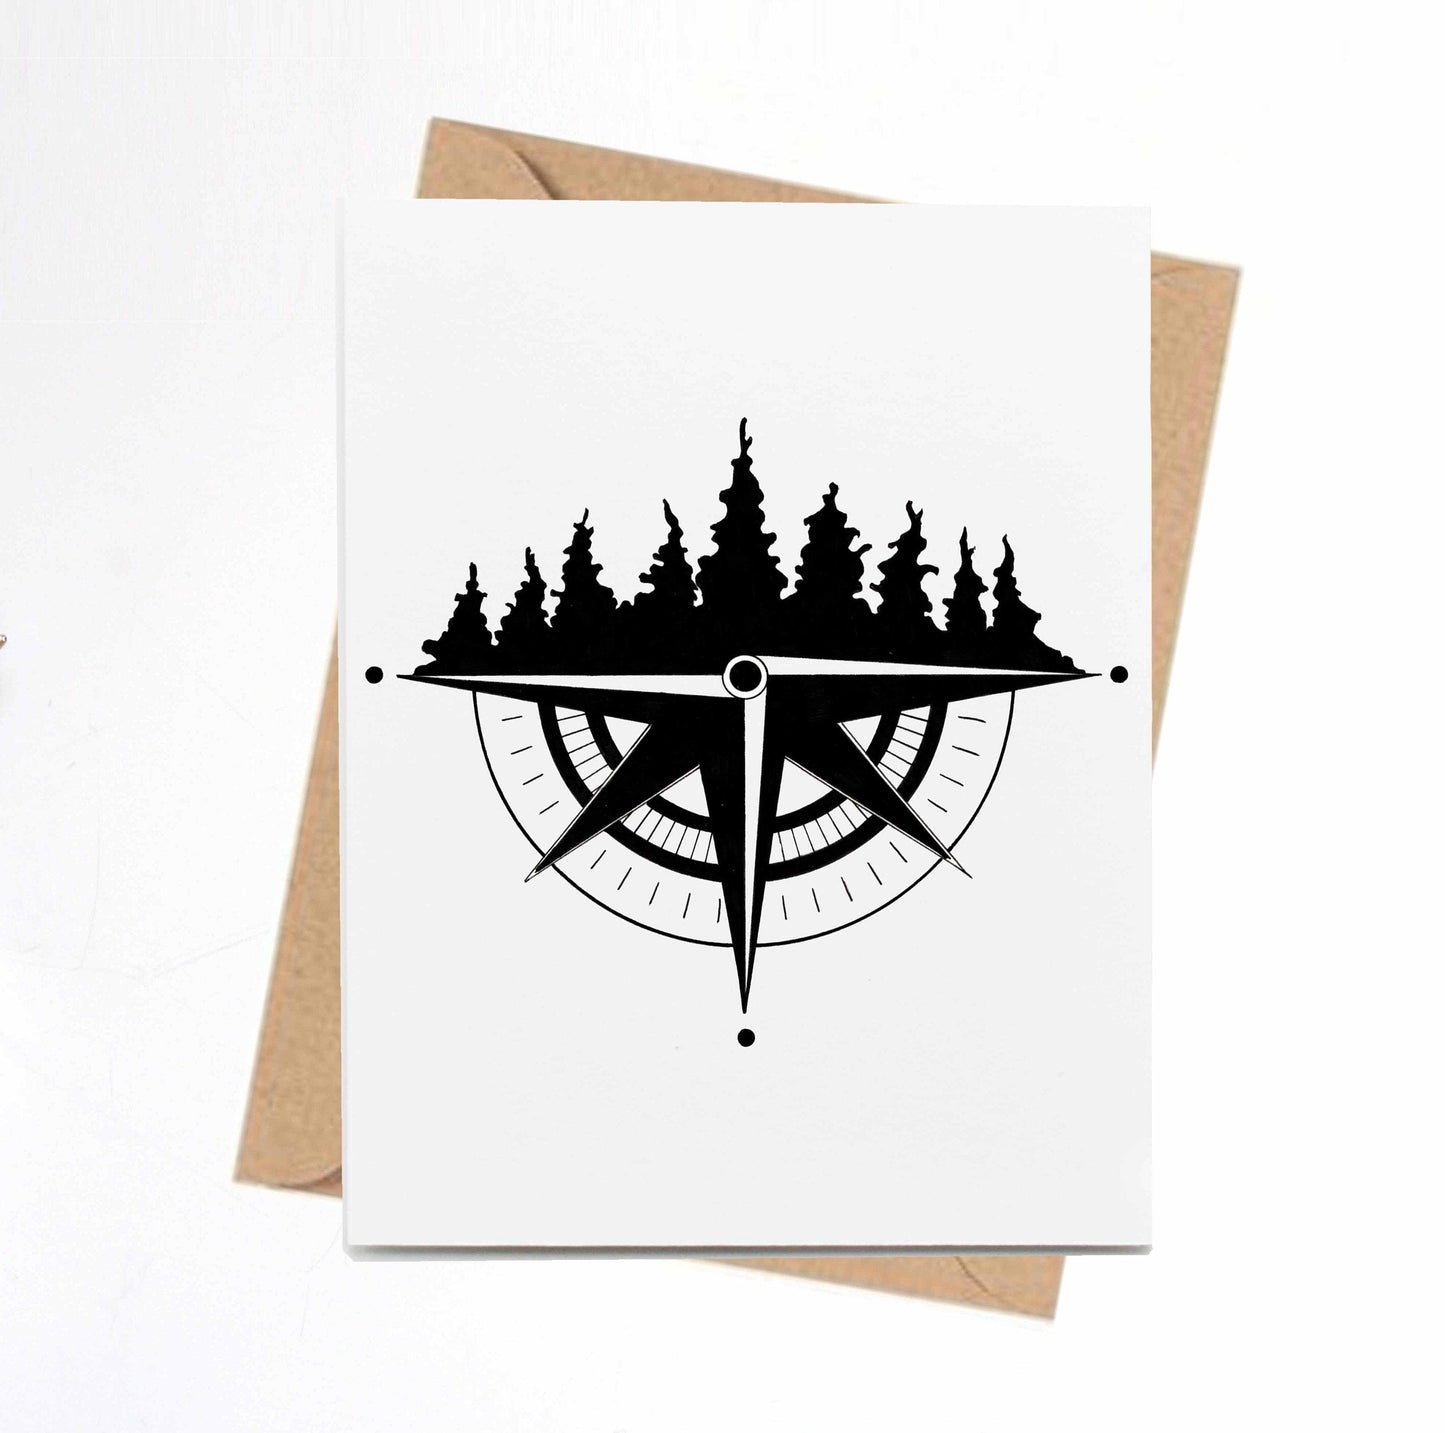 PinkPolish Design Note Cards "Tree Ridge Compass" Handmade Notecard